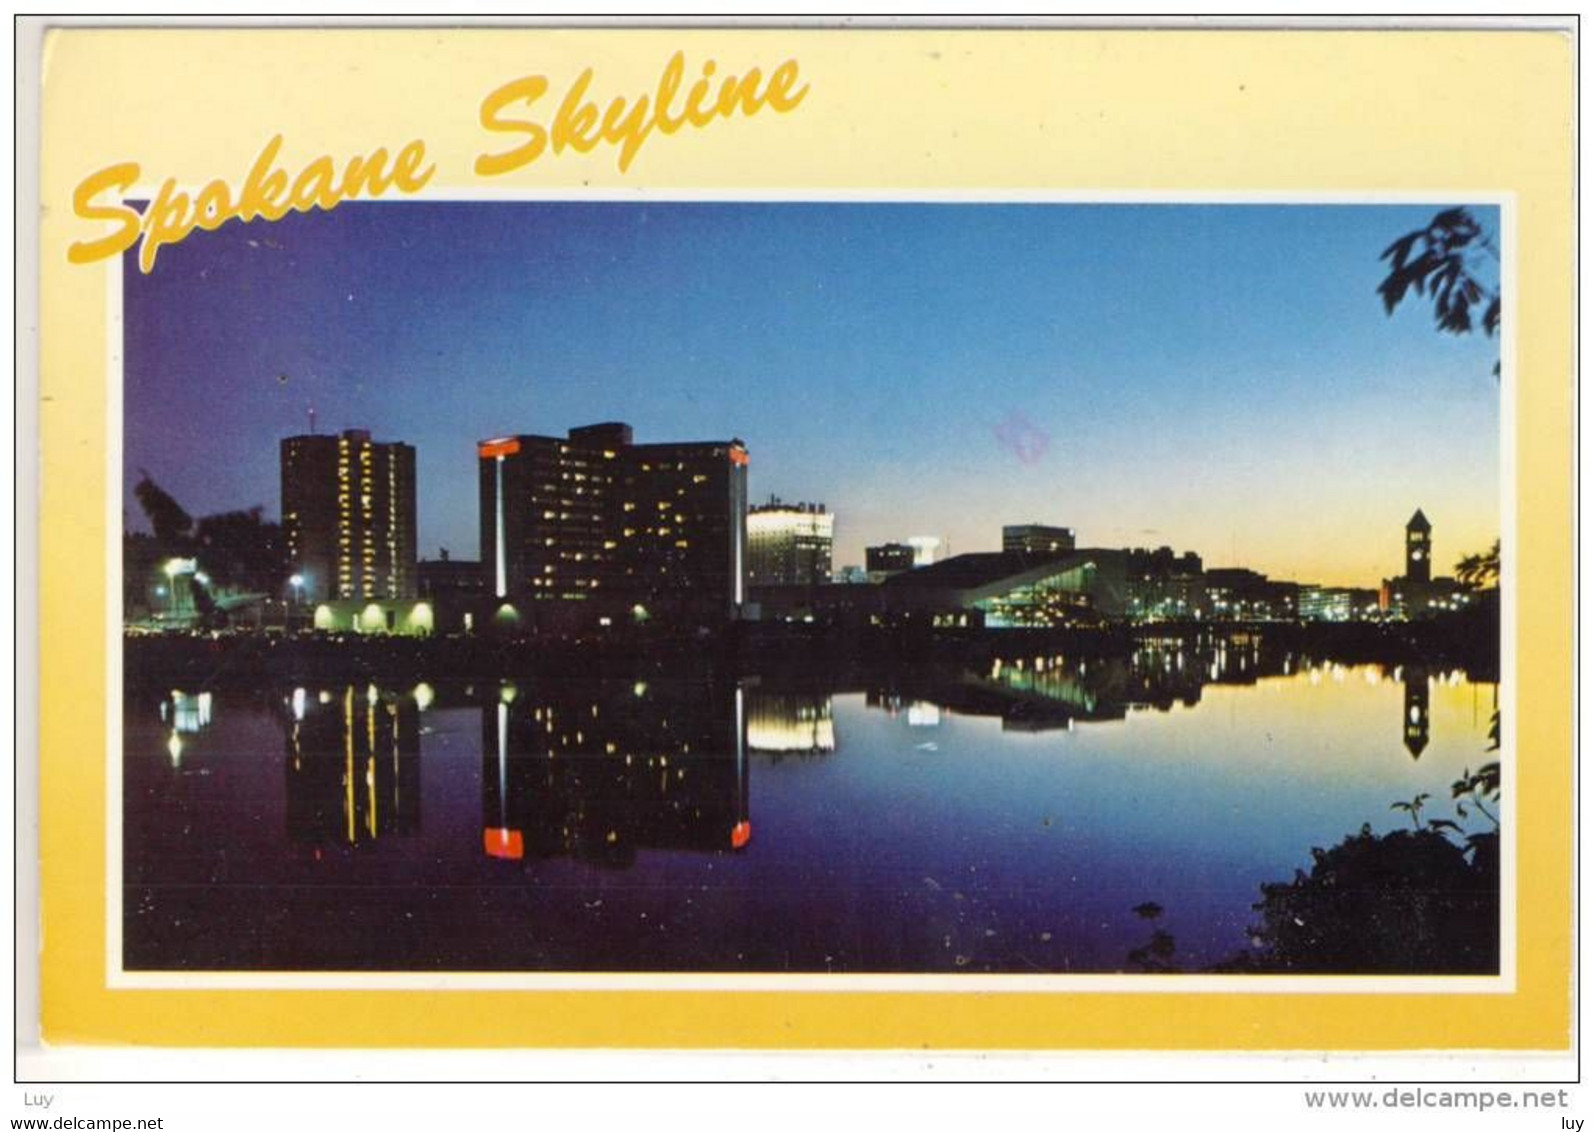 SPOKANE Skyline - The Mirrored Reflectins In The Placid Spokane River - Spokane